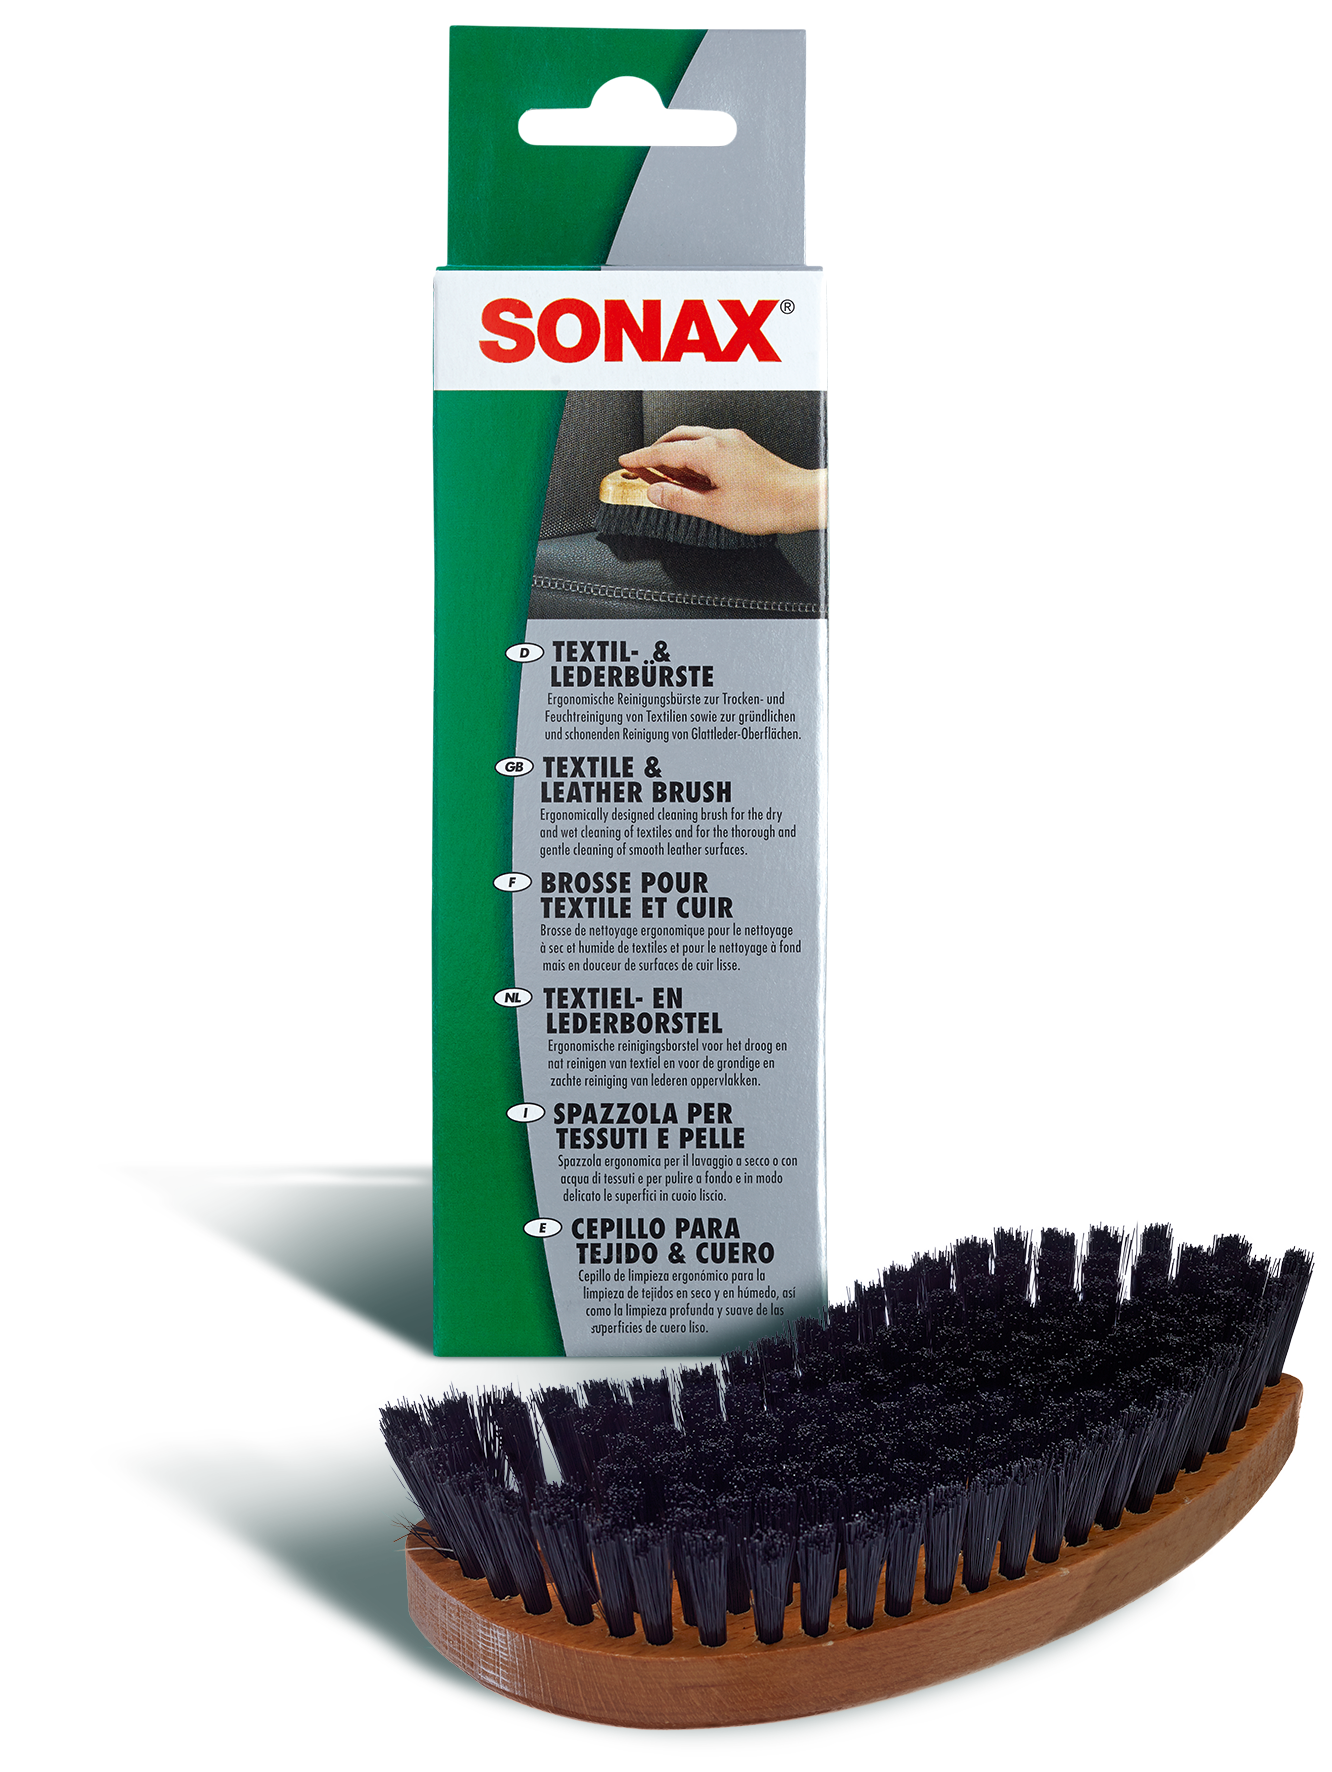 SONAX Textil+LederBürste 1 Stk. - Weigola Hygienevertrieb -  - Weigola Hygienevertrieb